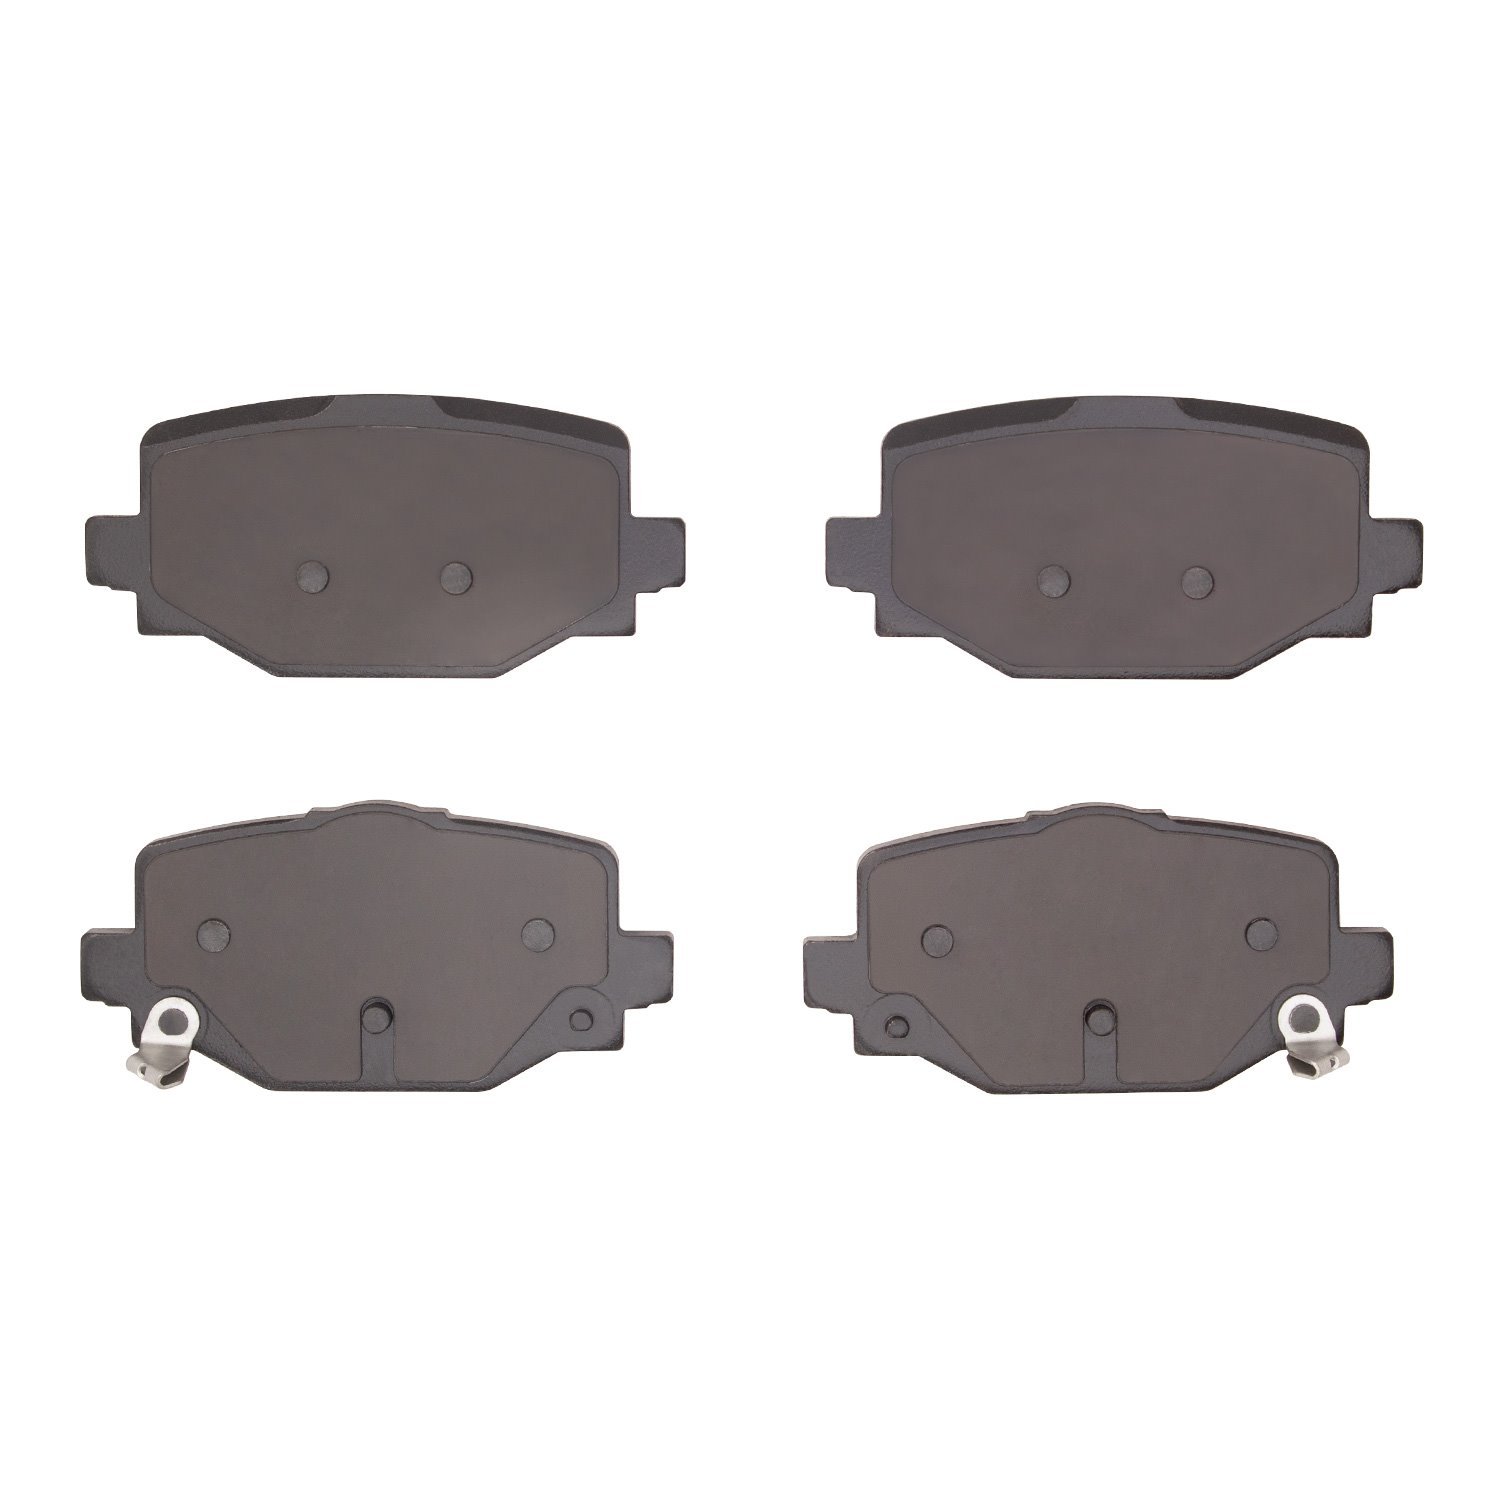 1310-2191-00 3000-Series Ceramic Brake Pads, Fits Select Infiniti/Nissan, Position: Rear